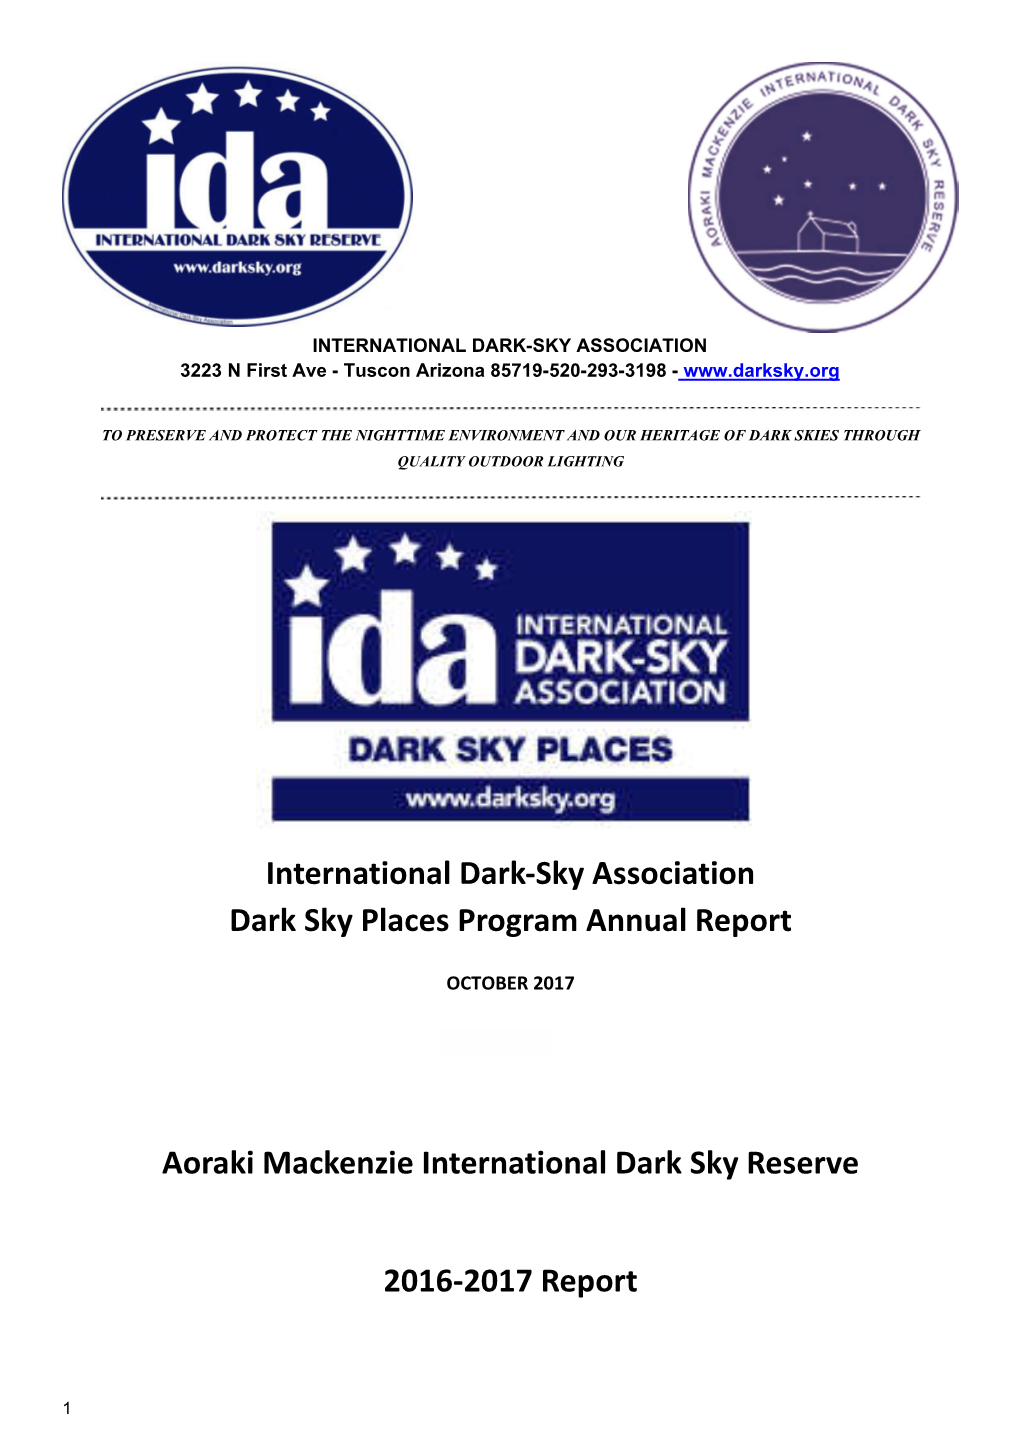 Aoraki Mackenzie International Dark Sky Reserve 2016-2017 Report